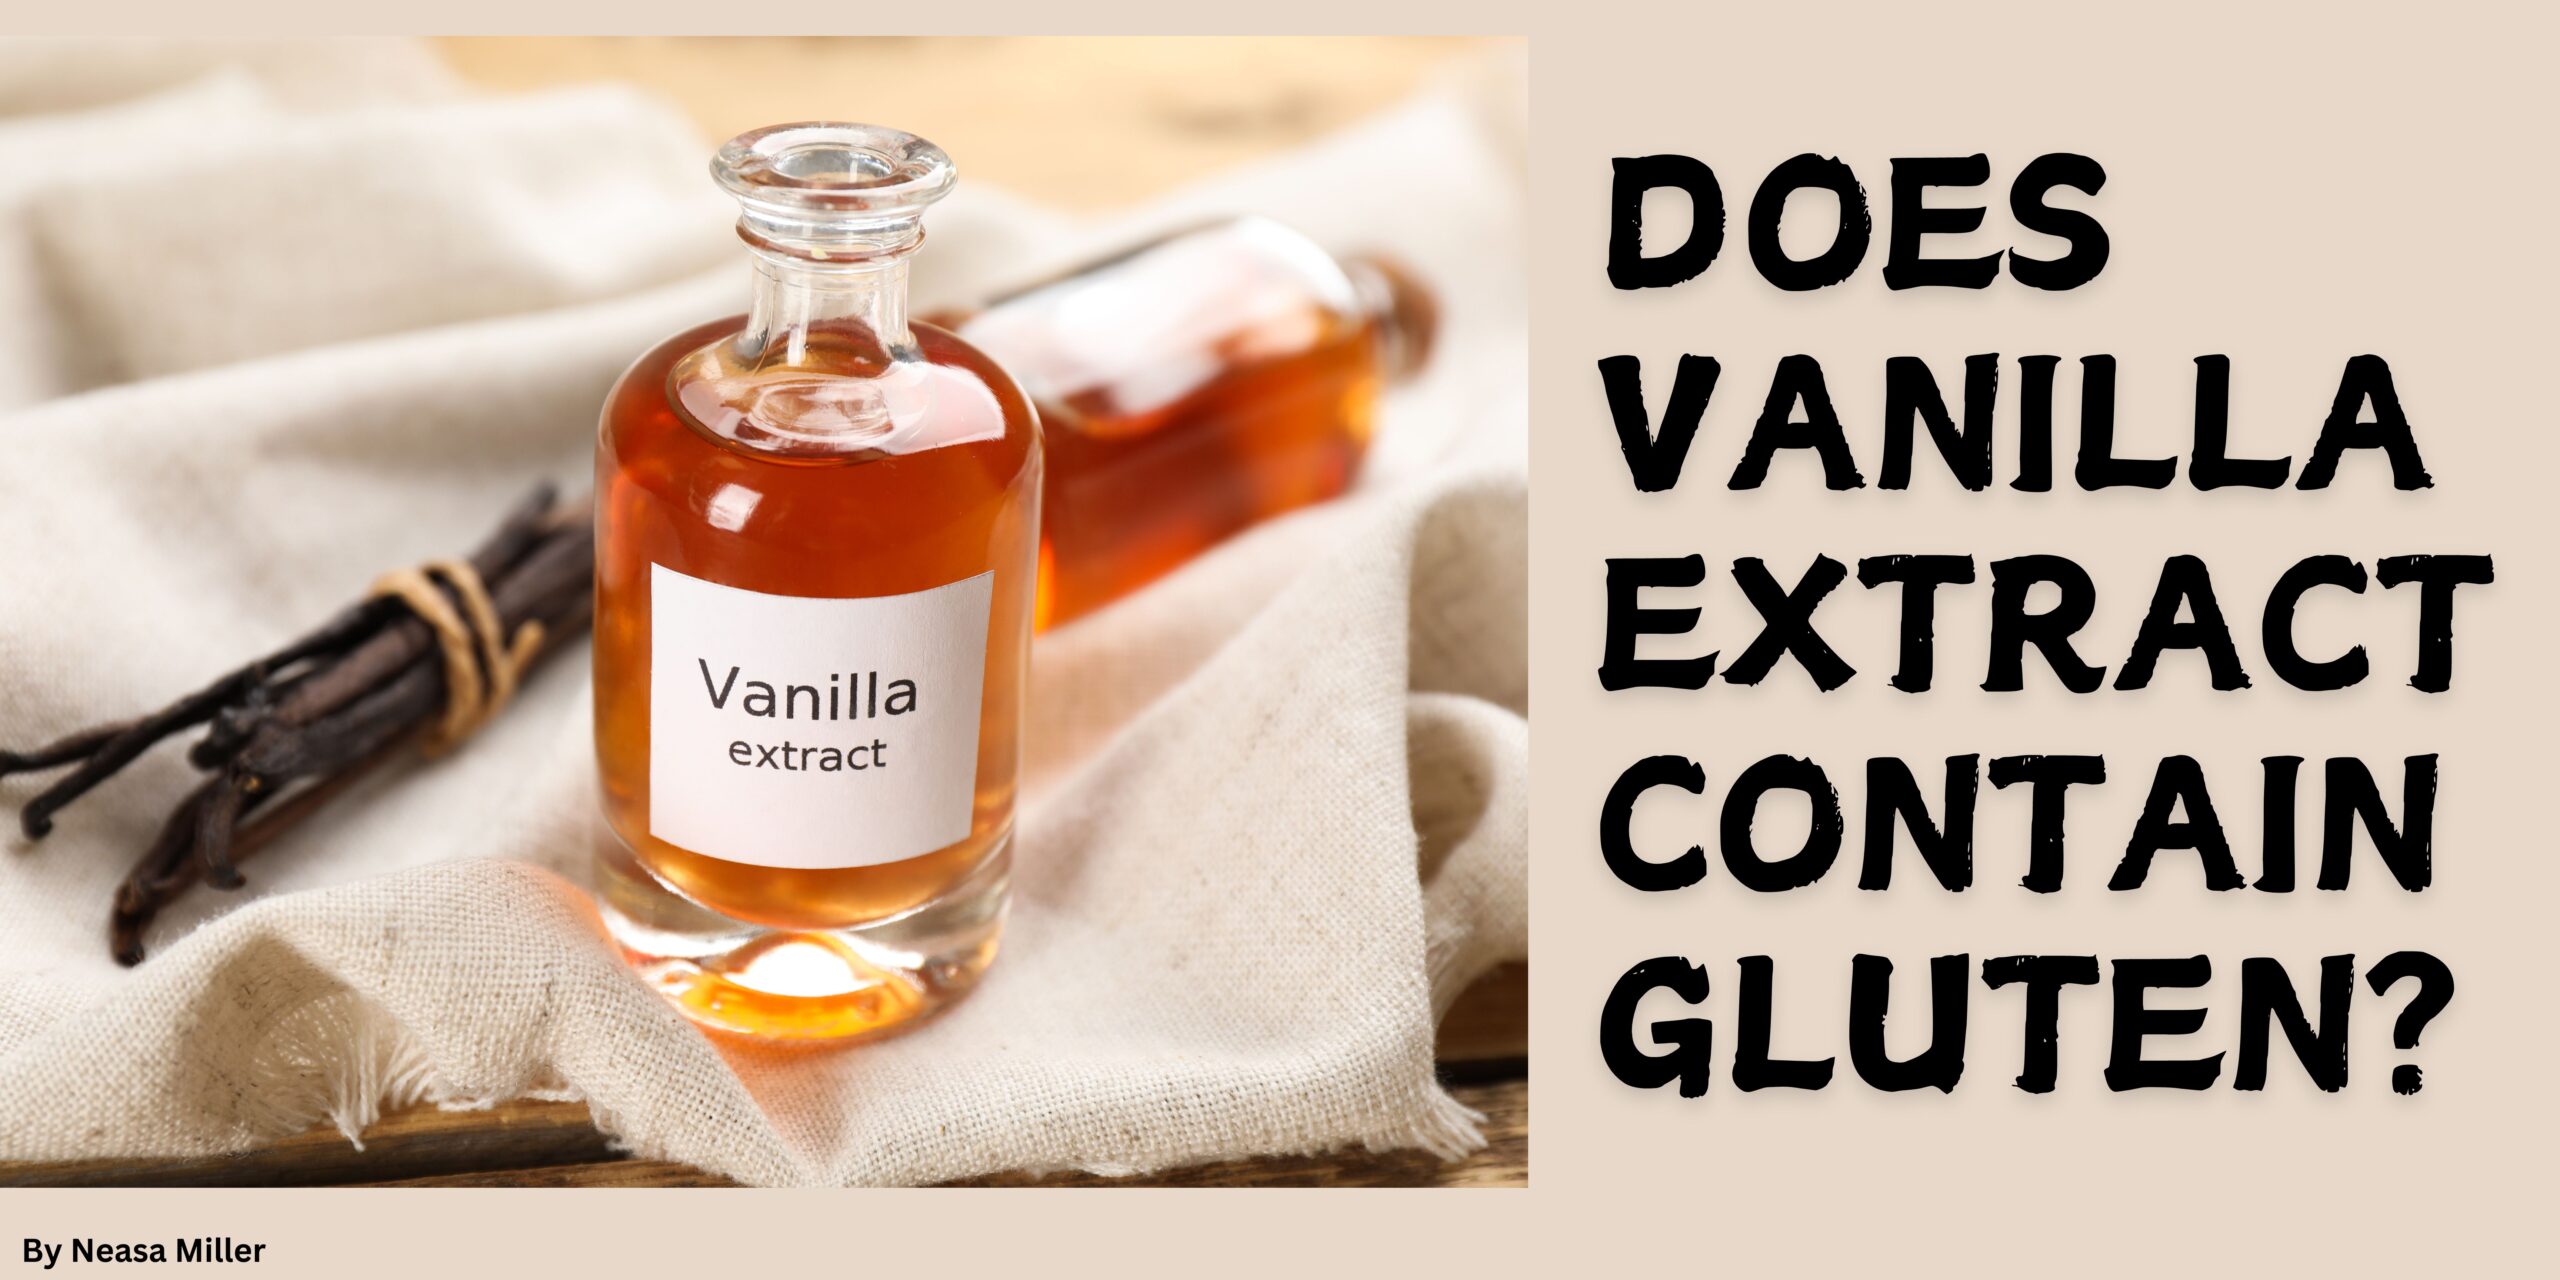 Does Vanilla Extract Contain Gluten?